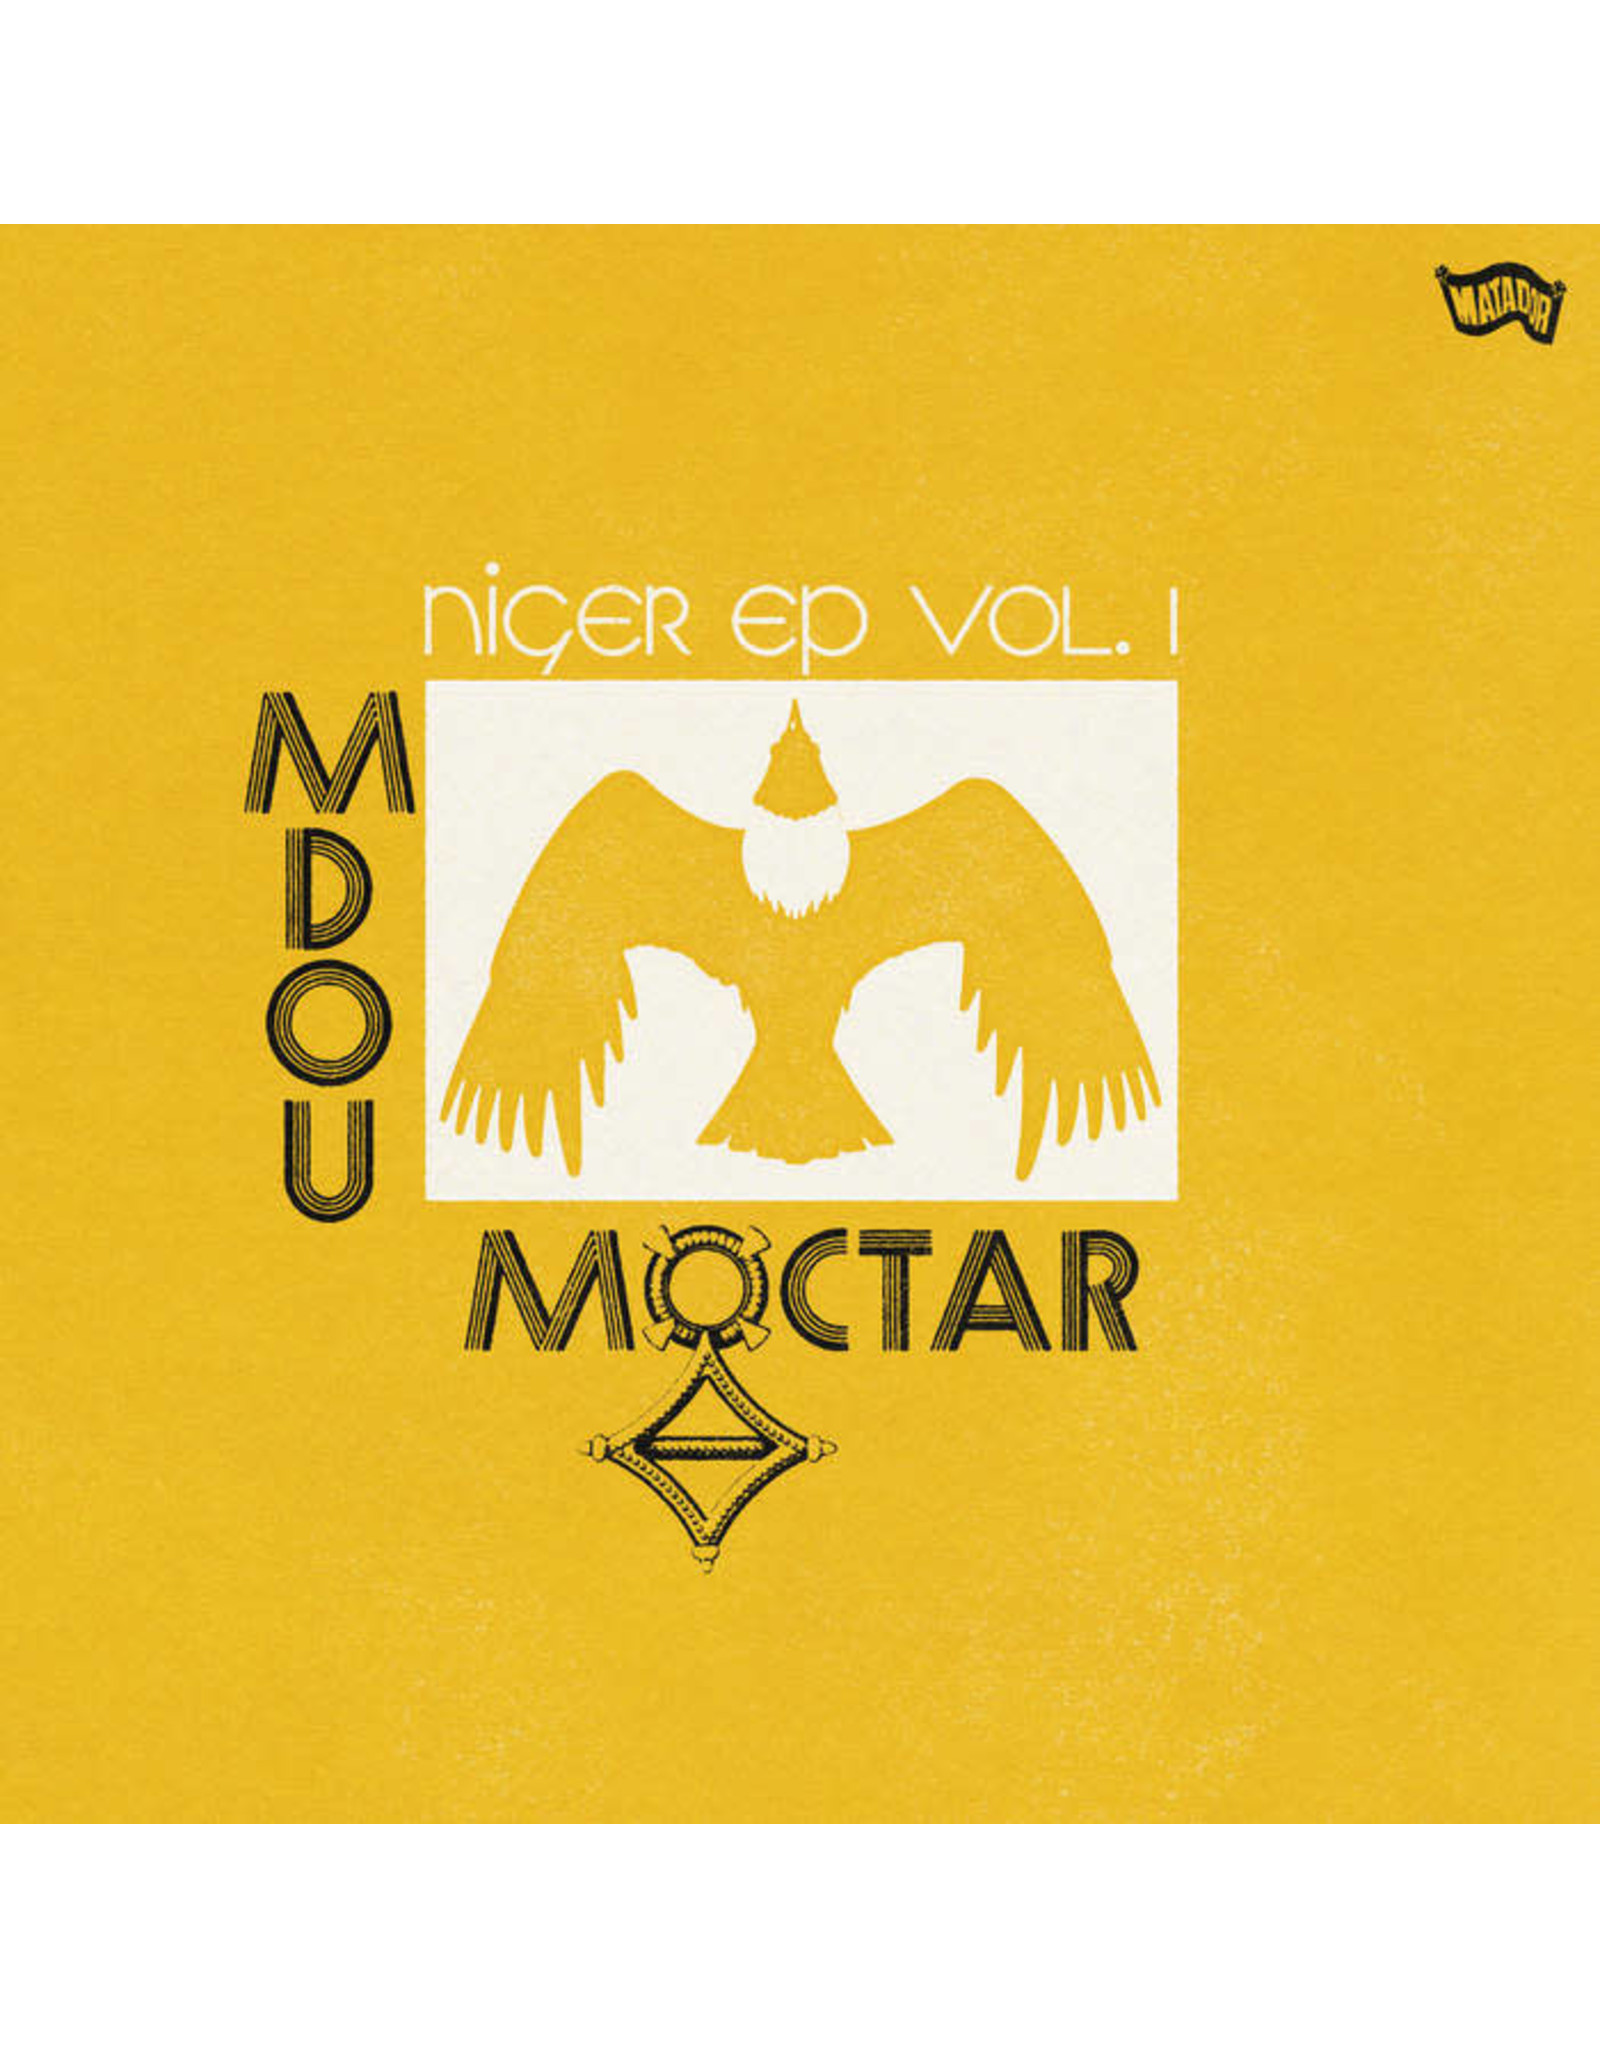 Matador Moctar, Mdou: Niger EP Vol. 1 (yellow) LP